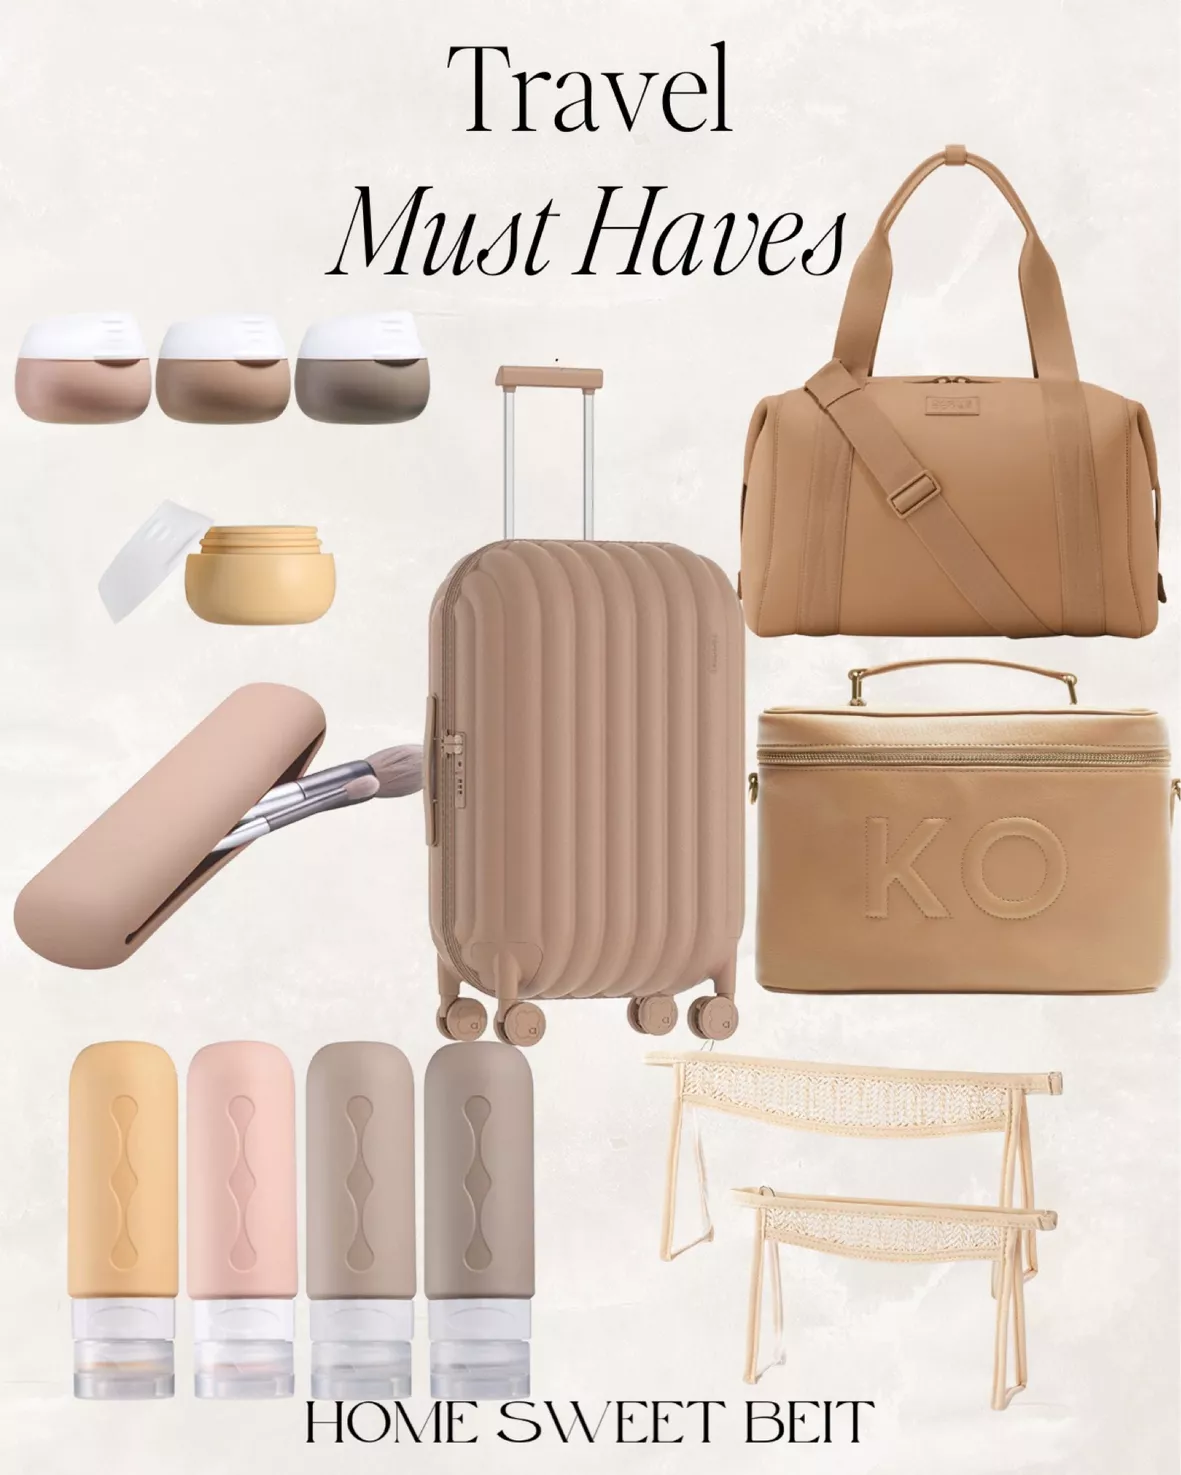 2Pcs Cosmetic Travel Bag, Brown Checkered Makeup Bag, Lightweight